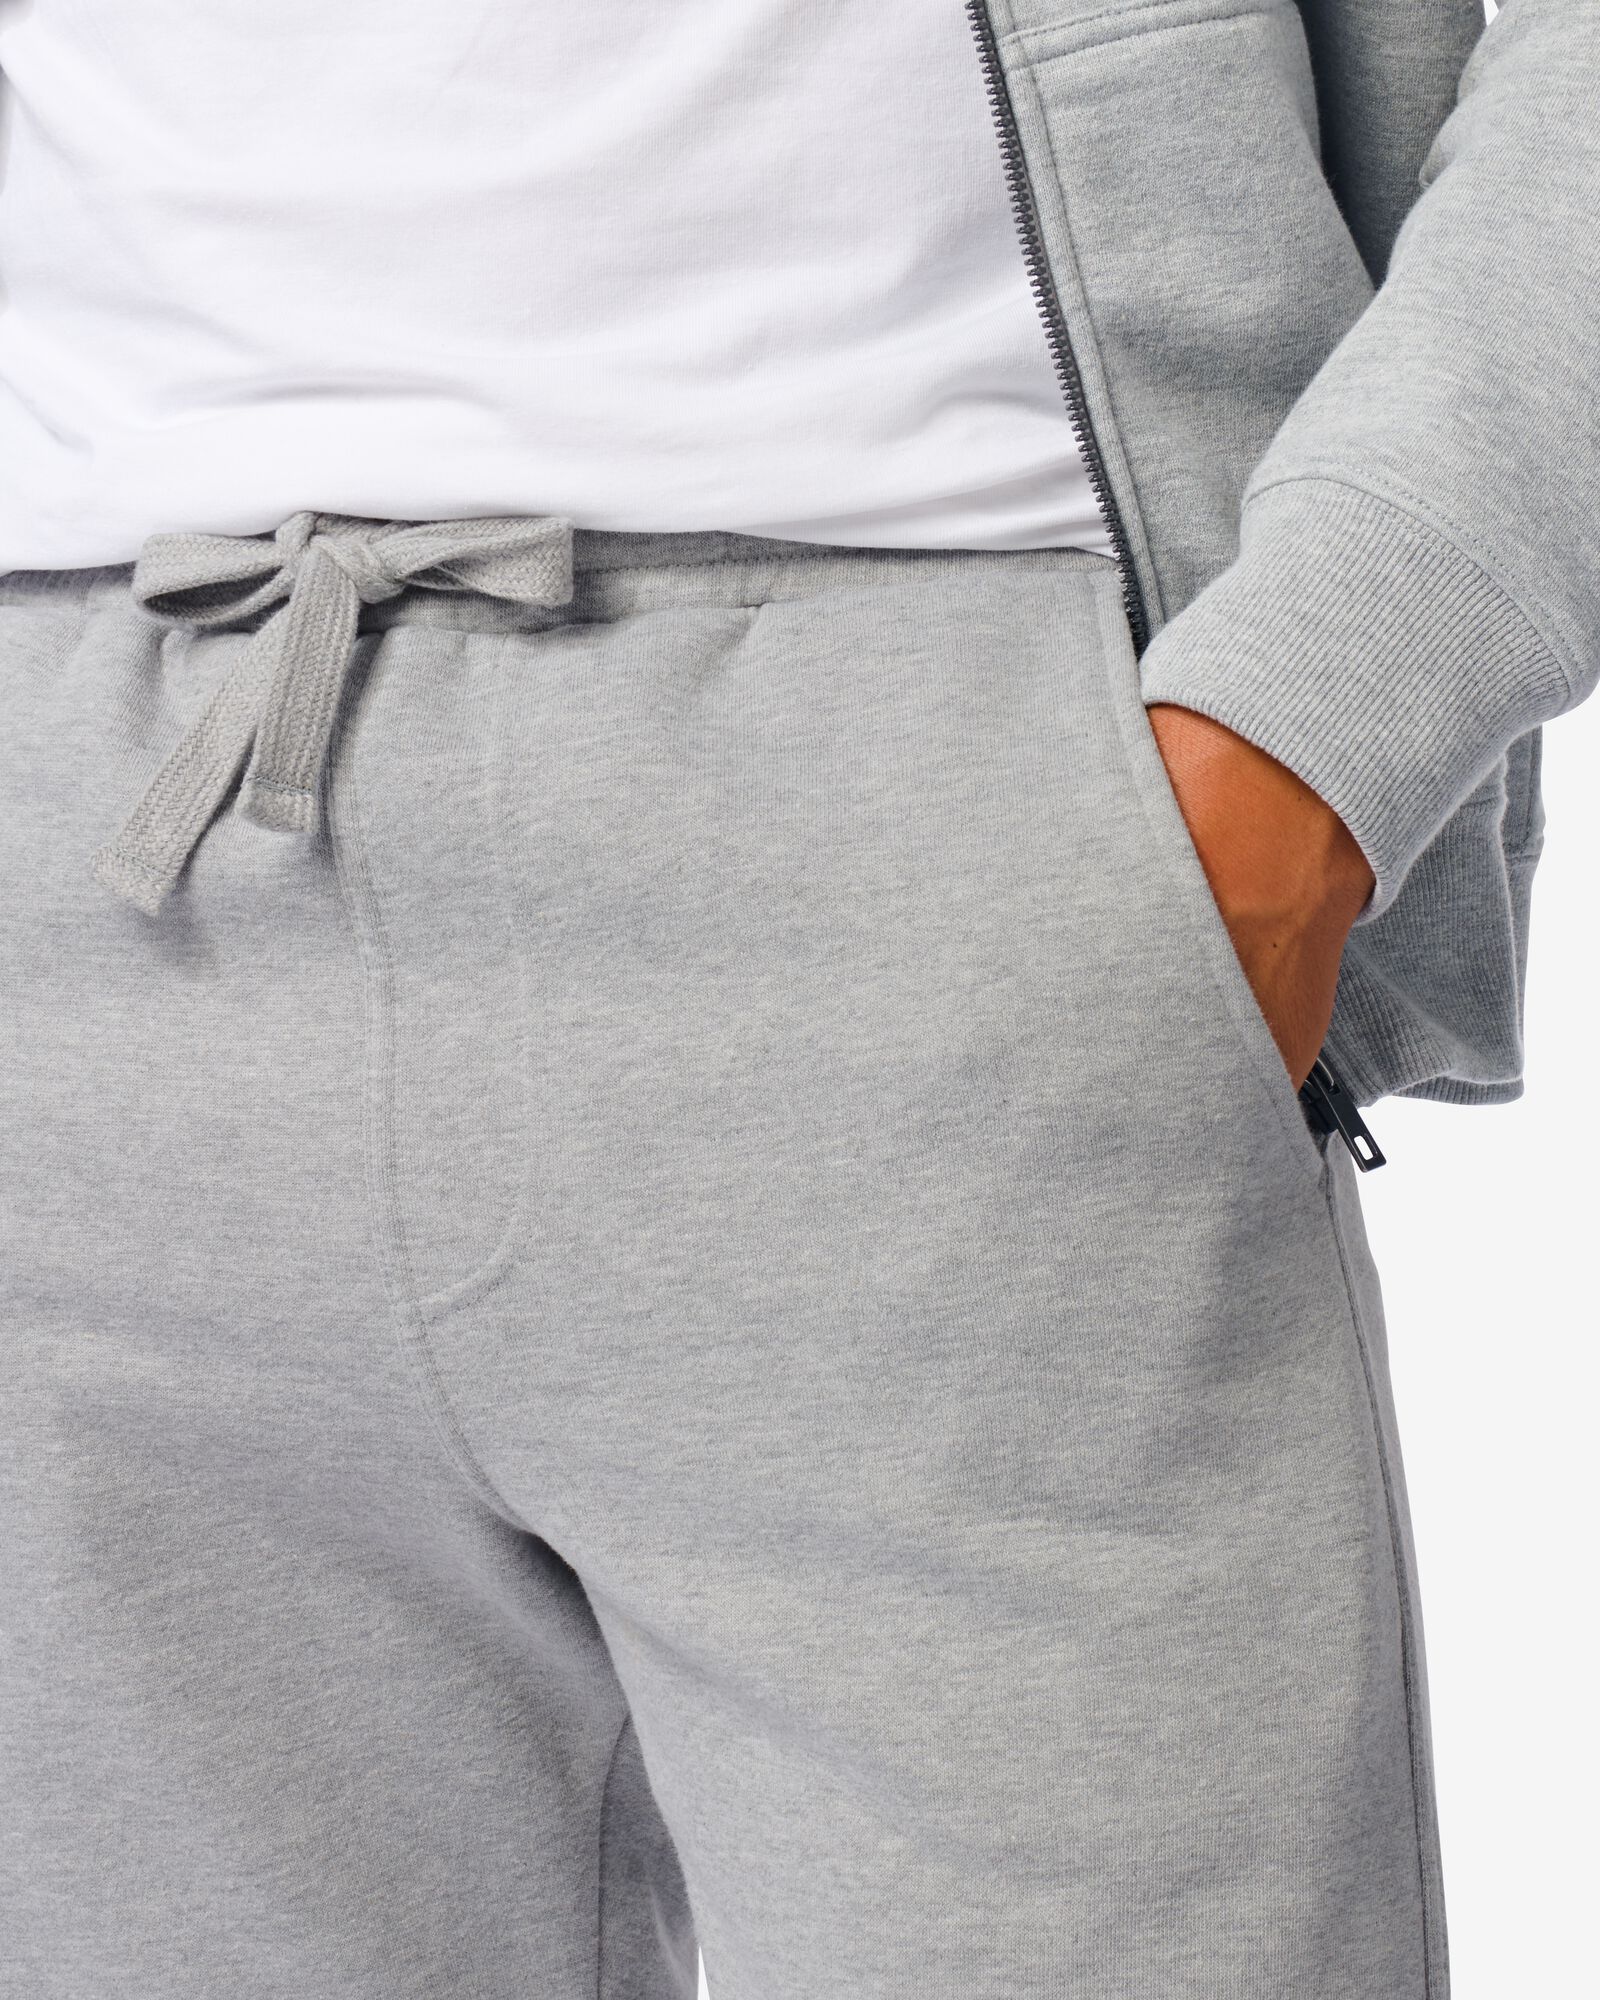 pantalon sweat homme gris gris - 2111210GREY - HEMA